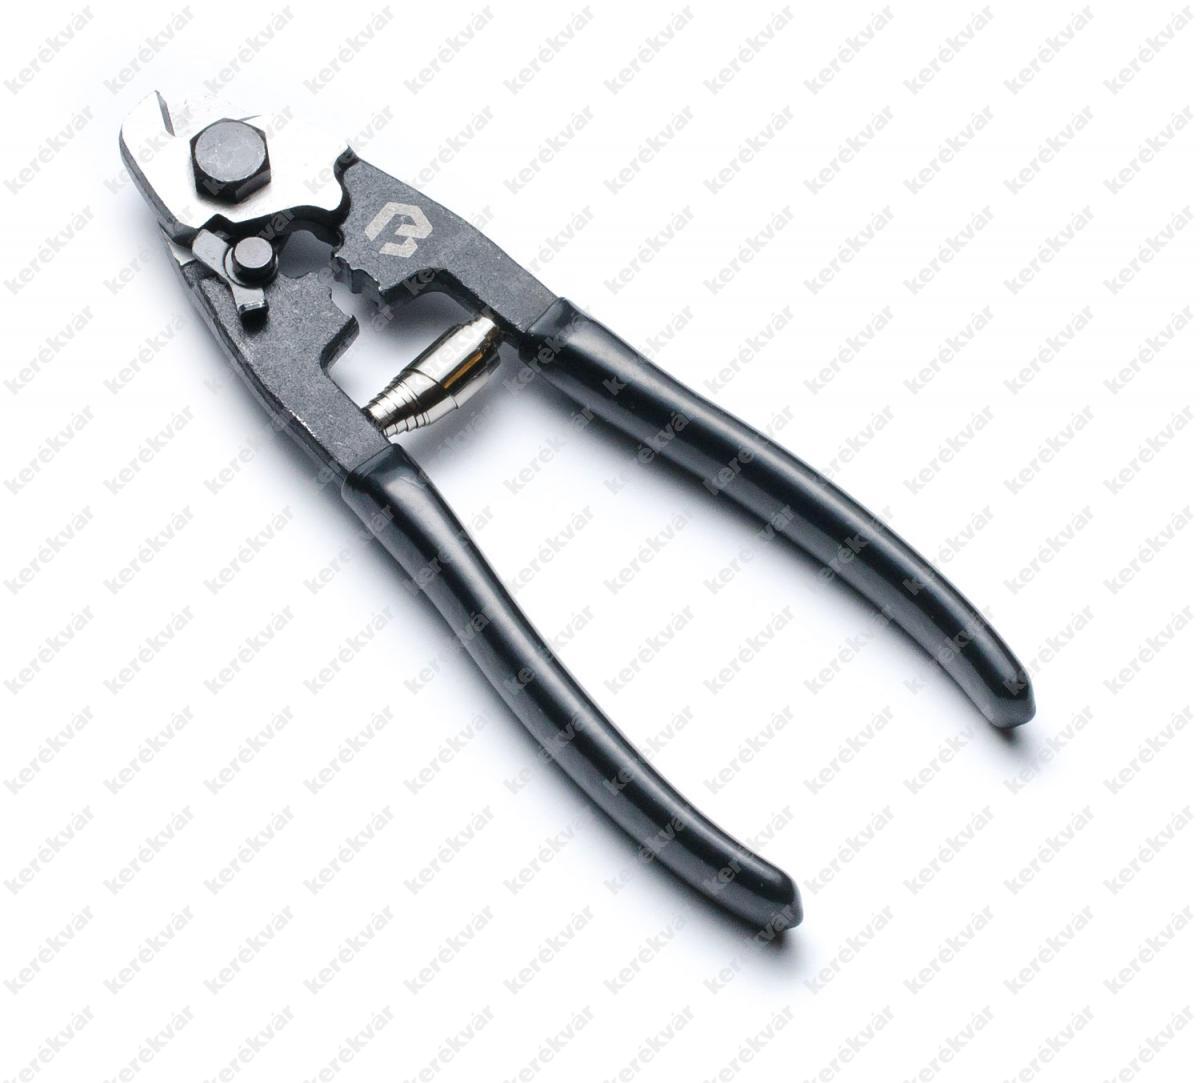 Bikefun bowden Cutters tool